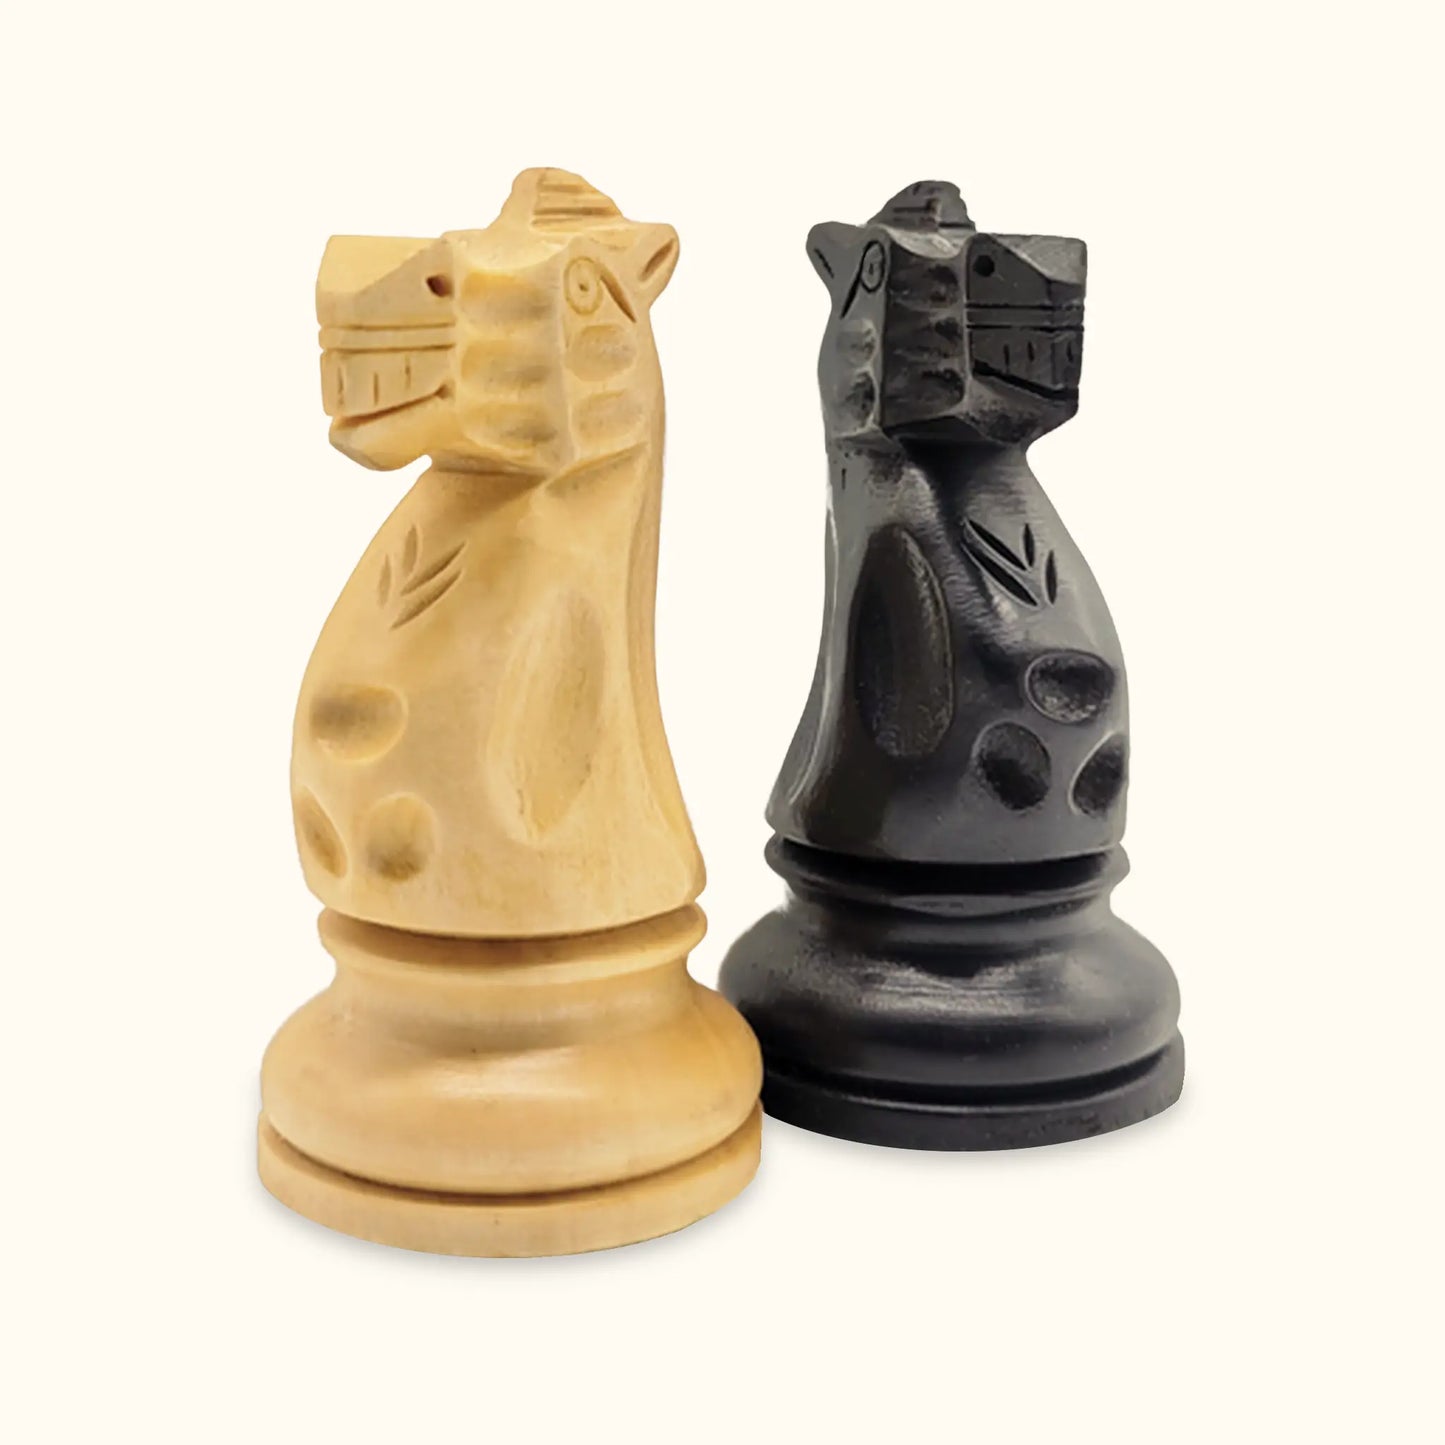 Chess pieces American Staunton ebonized knight